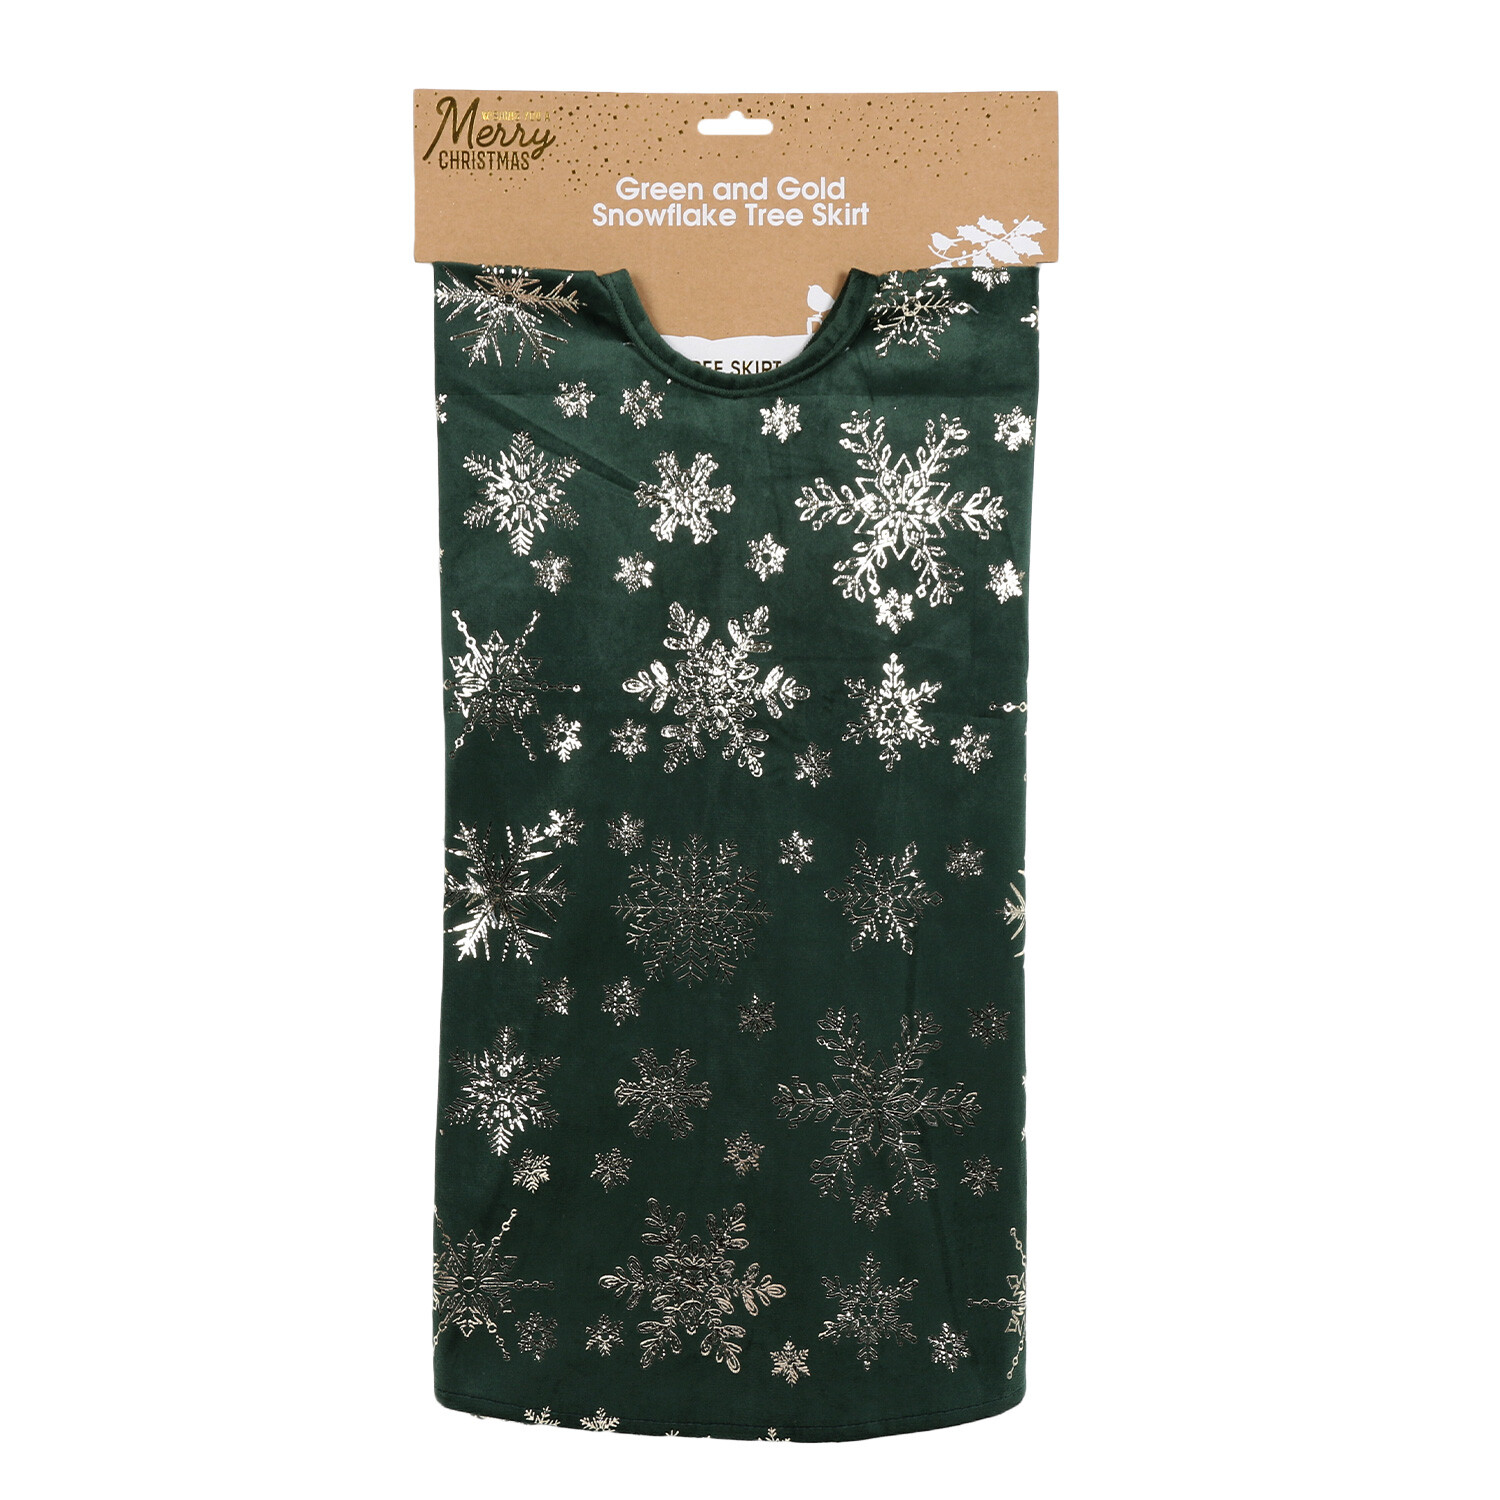 Green and Gold Snowflake Tree Skirt - Green Image